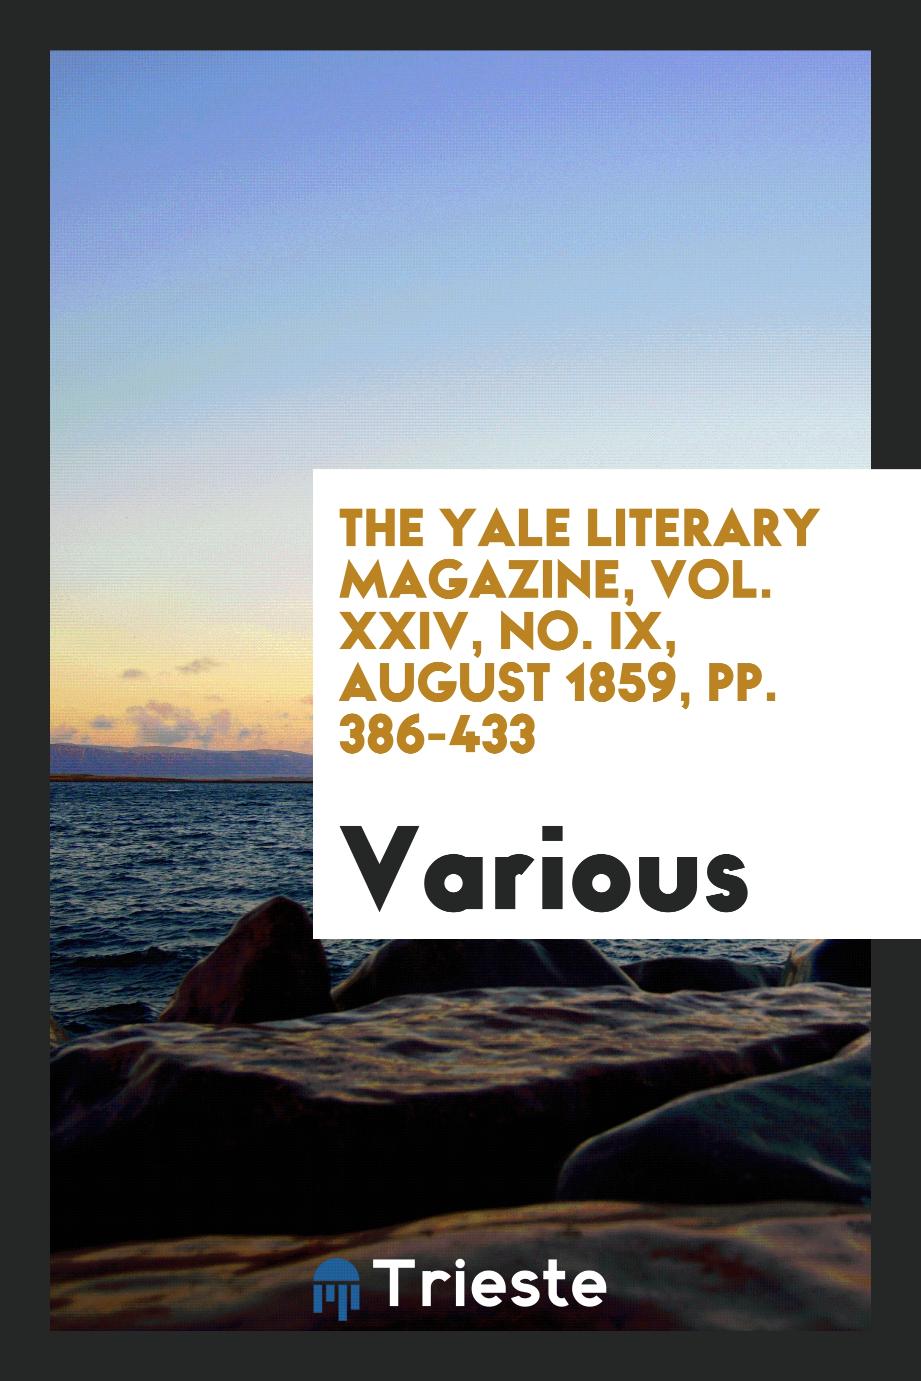 The Yale literary magazine, Vol. XXIV, No. IX, August 1859, pp. 386-433